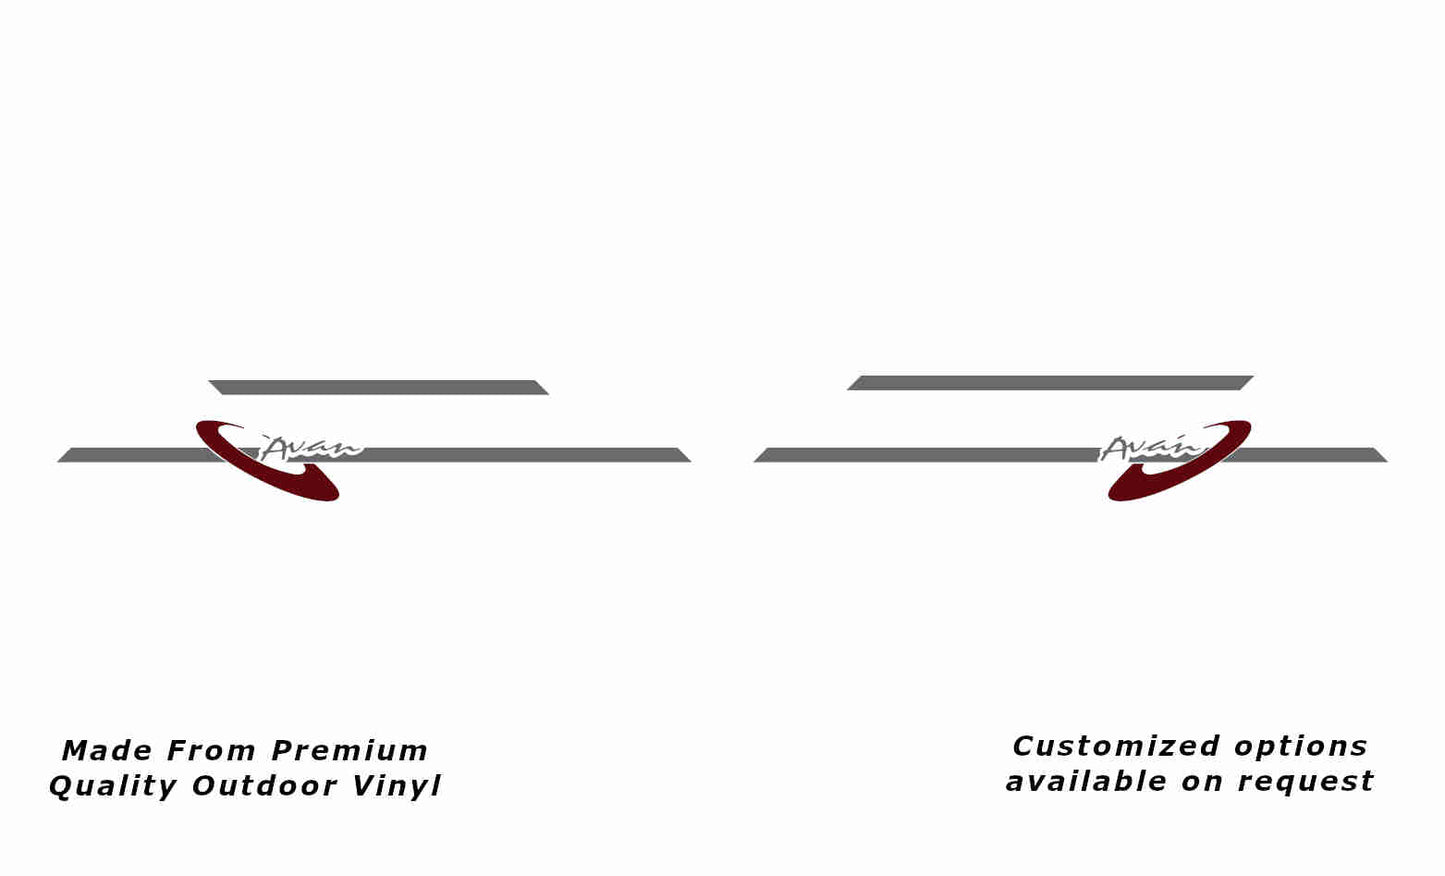 Avan the erin mk ii side stripes caravan replacement vinyl decal sticker in silver grey and purple red.